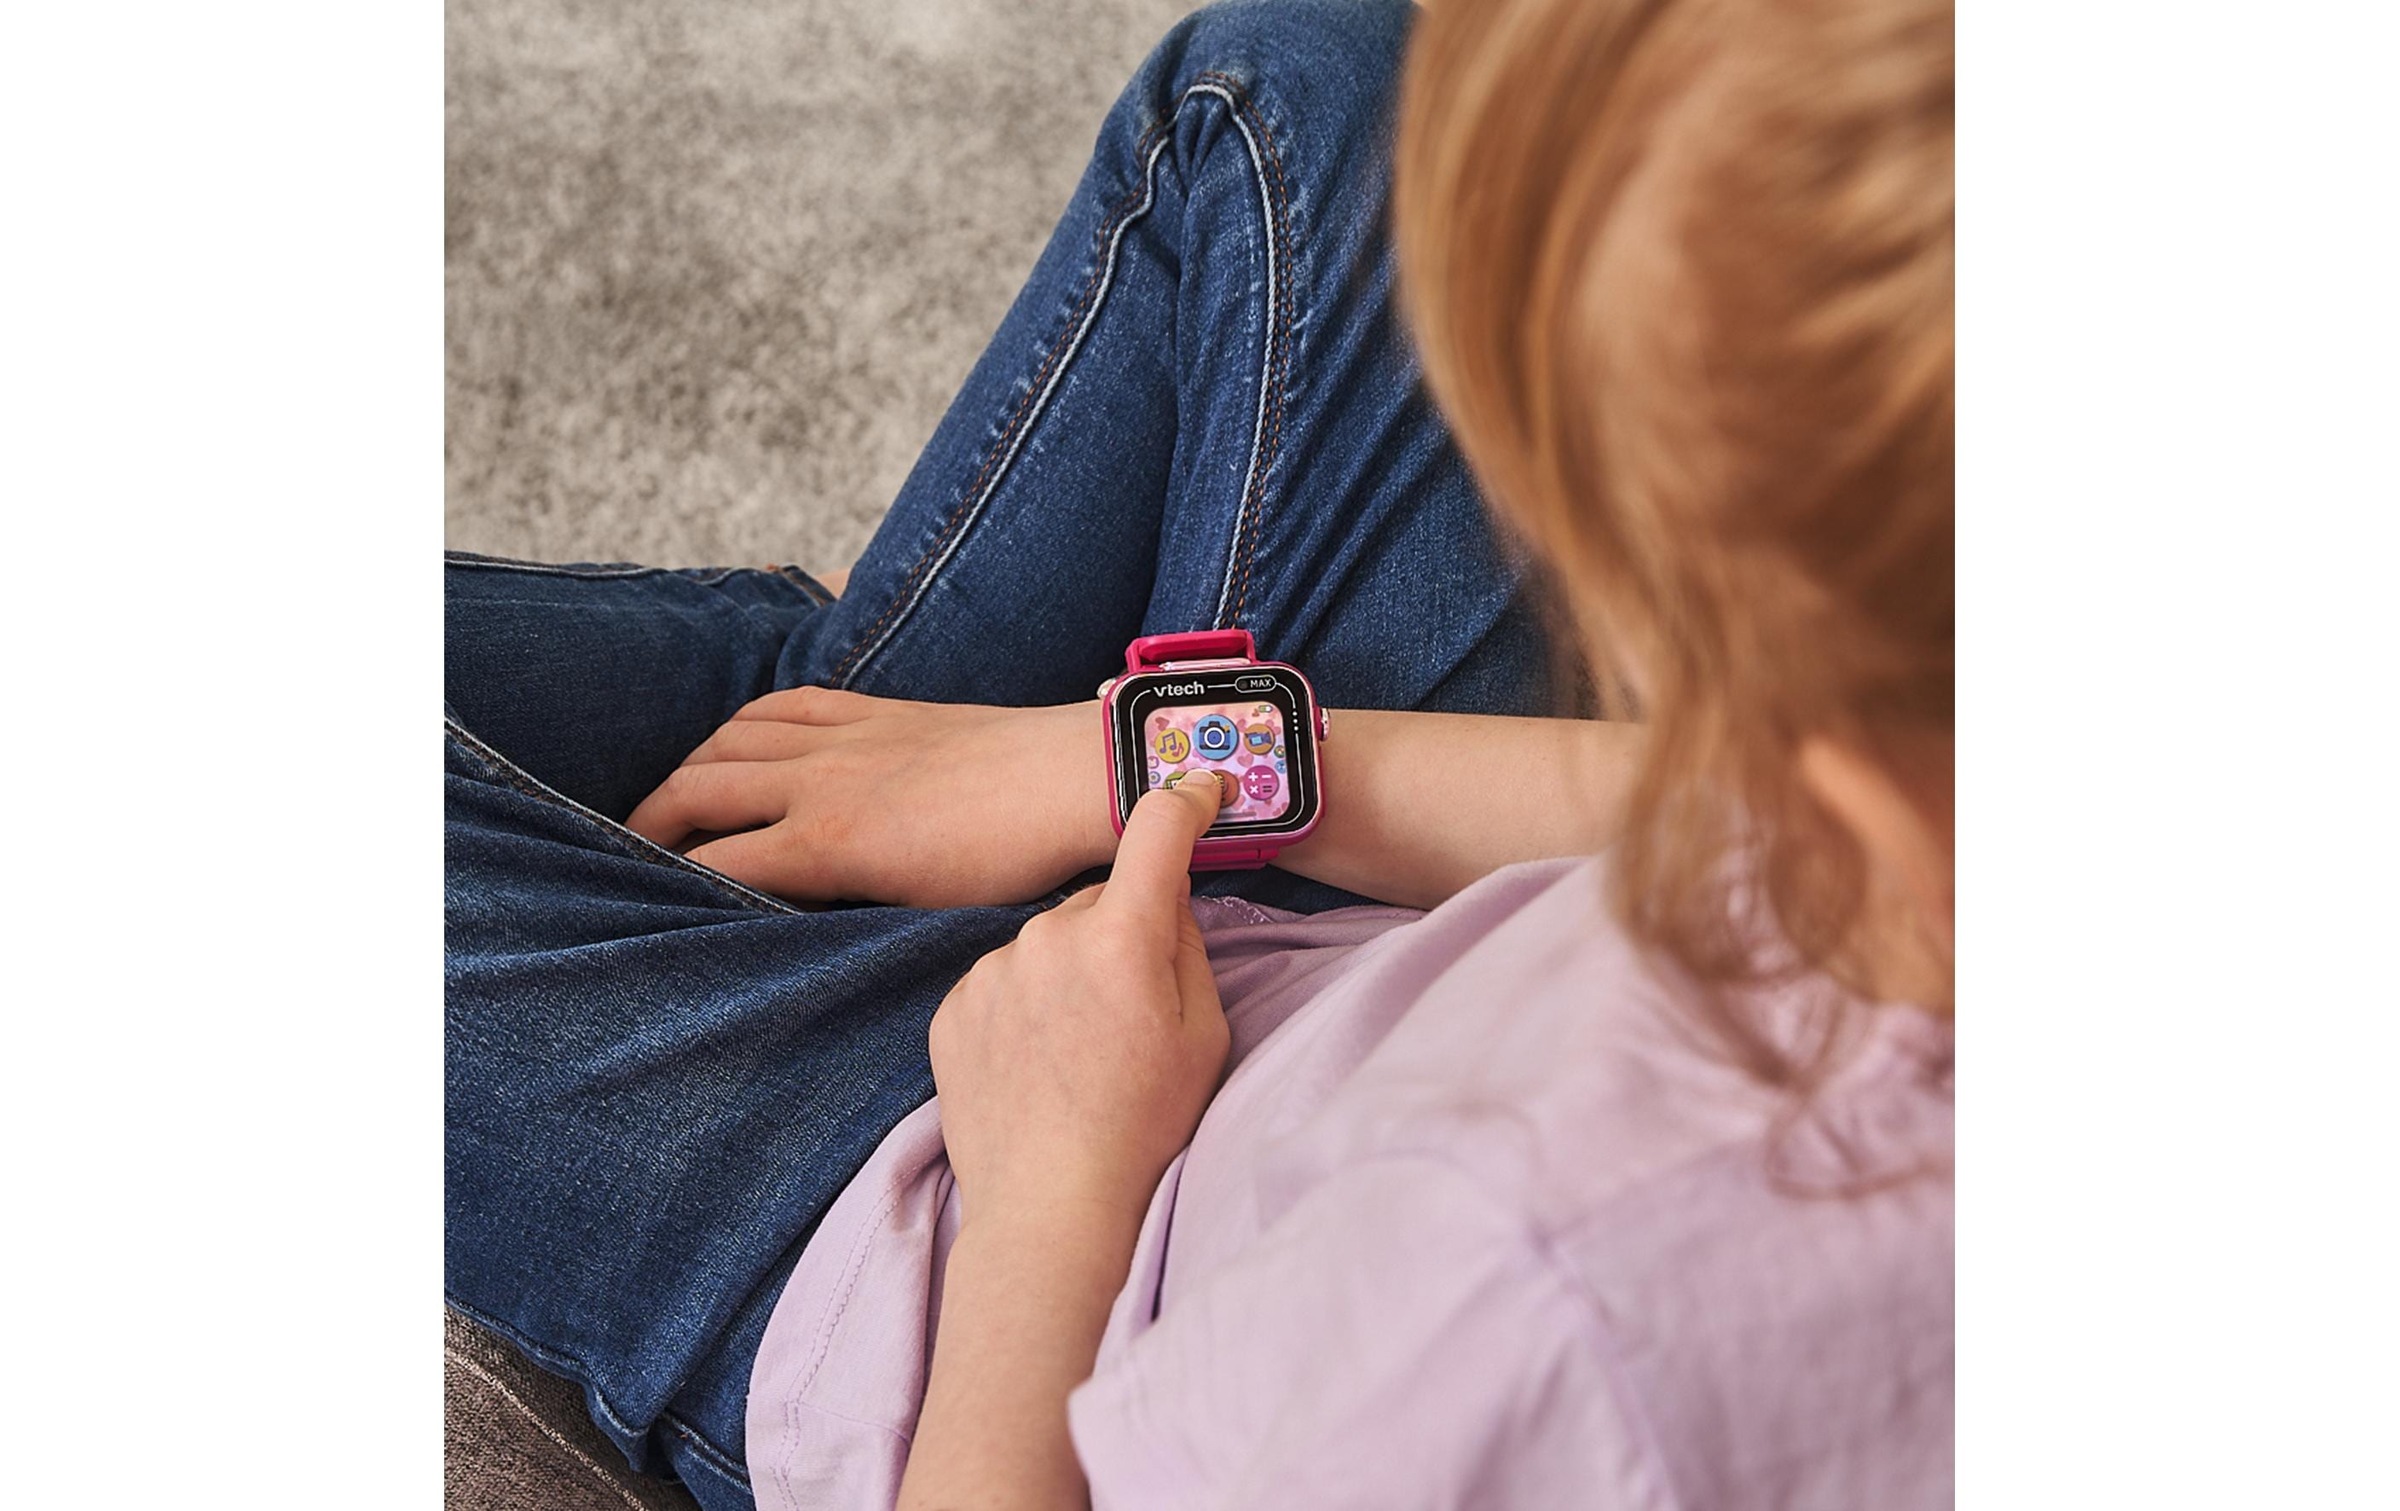 Vtech® Kinderkamera »KidiZoom Smartwatch MAX framboise -FR-« Découvrir sur